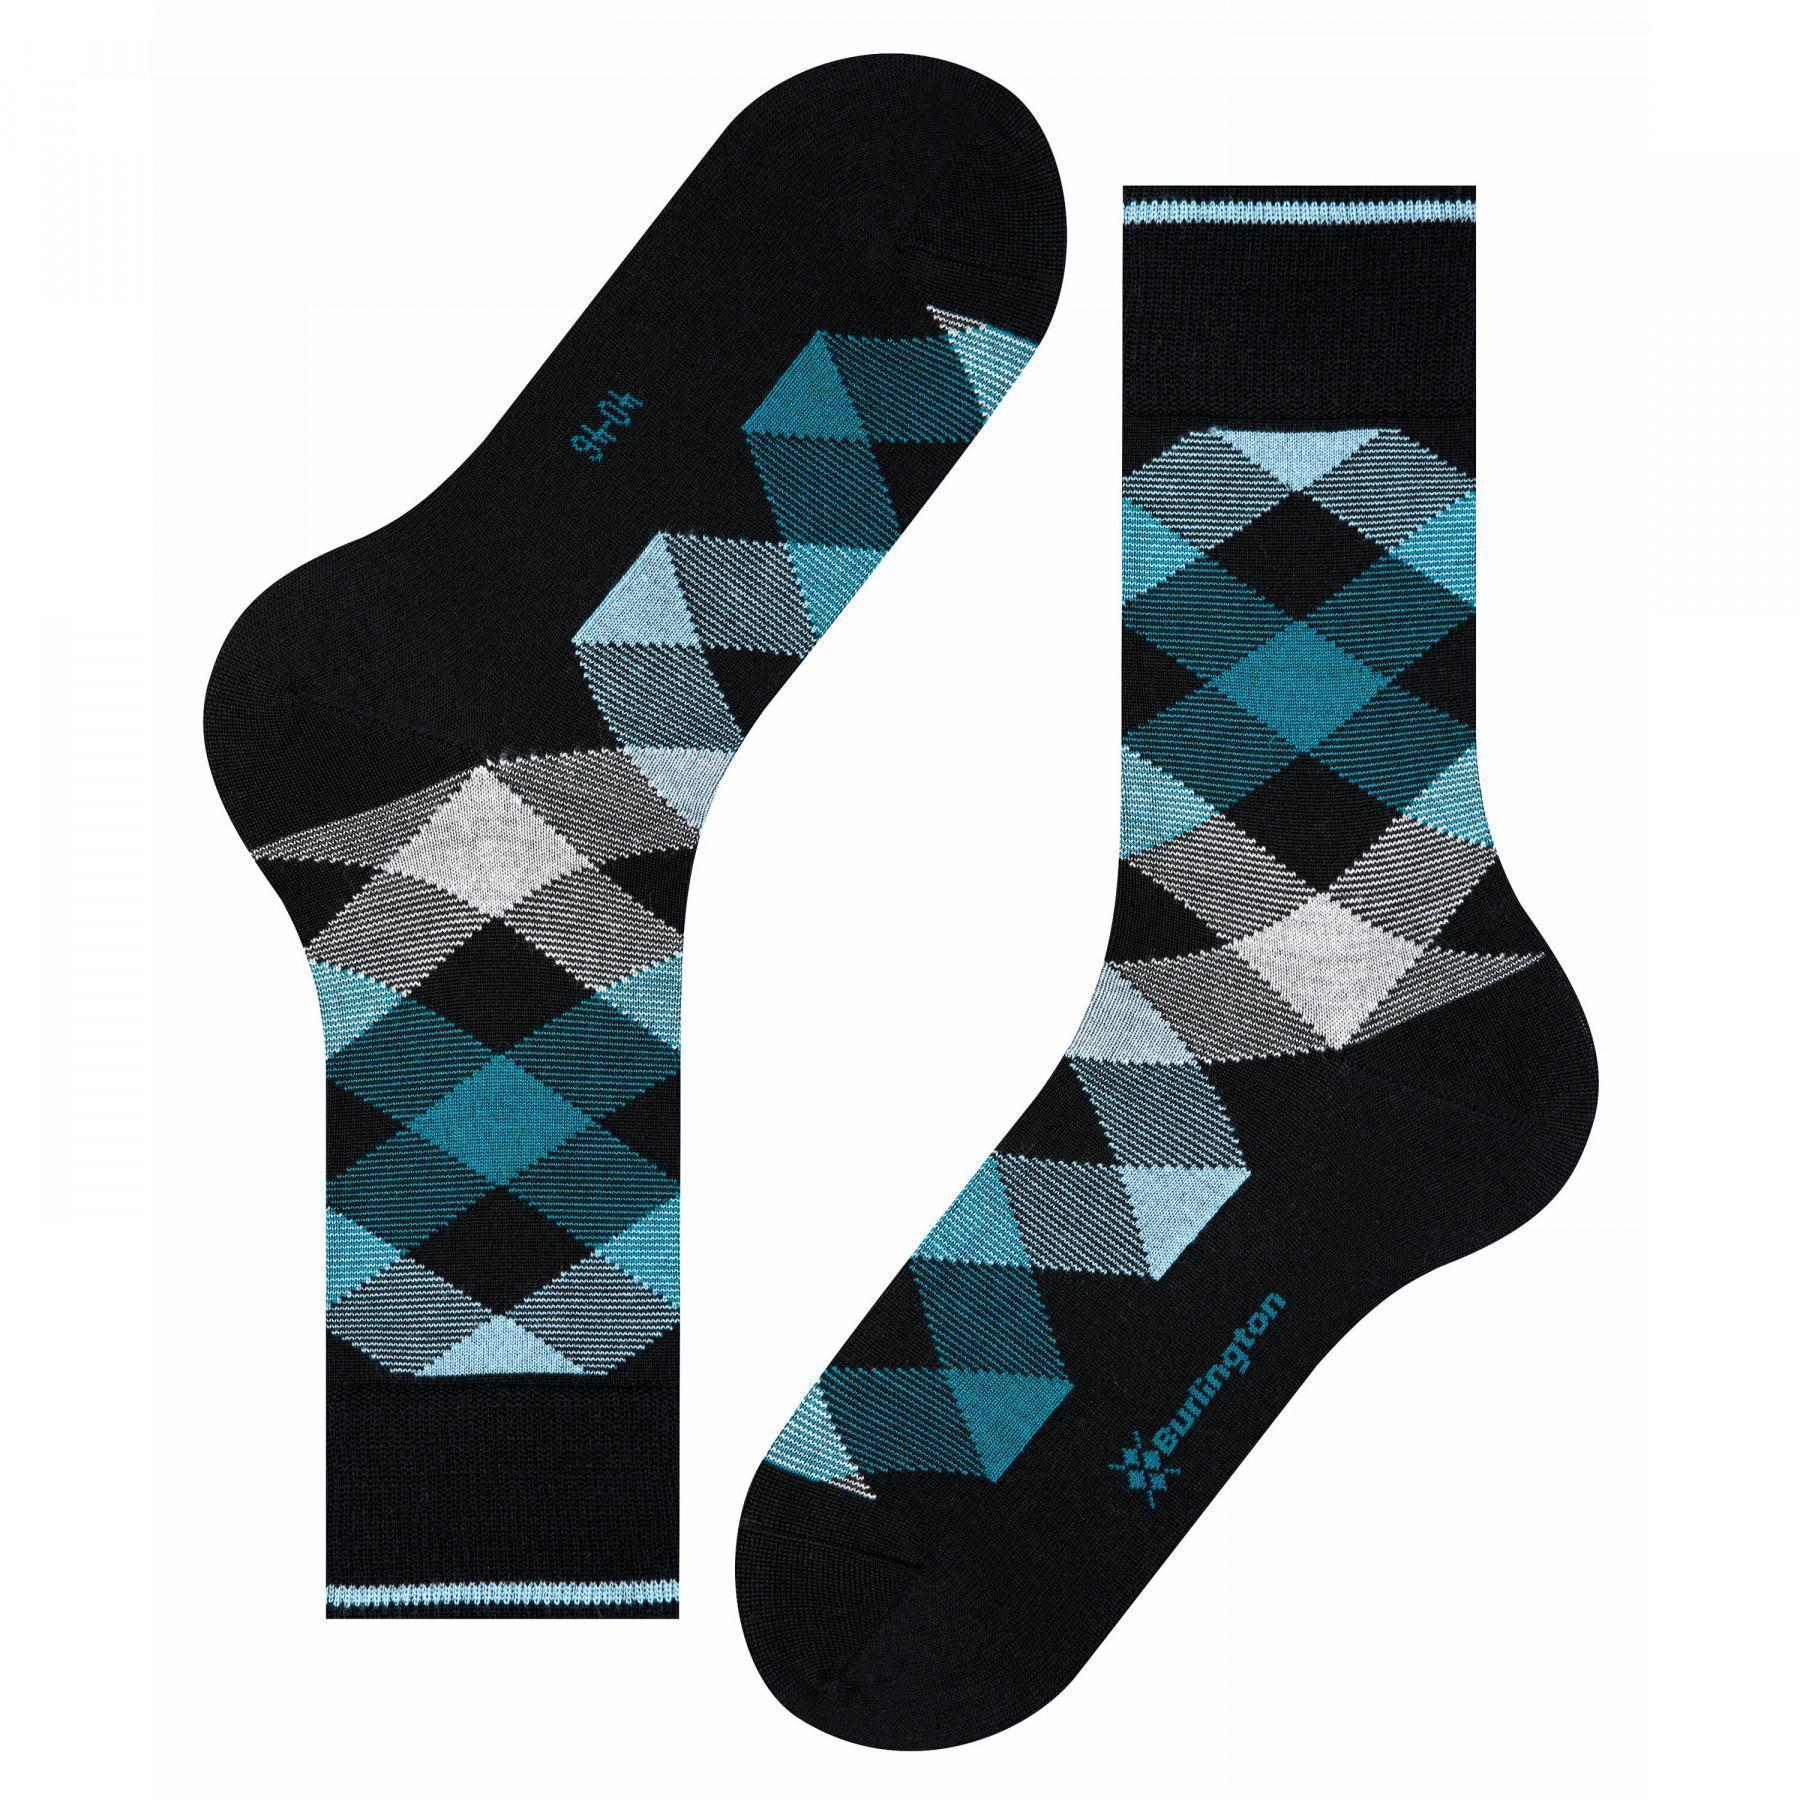 Socks Burlington Newcastle